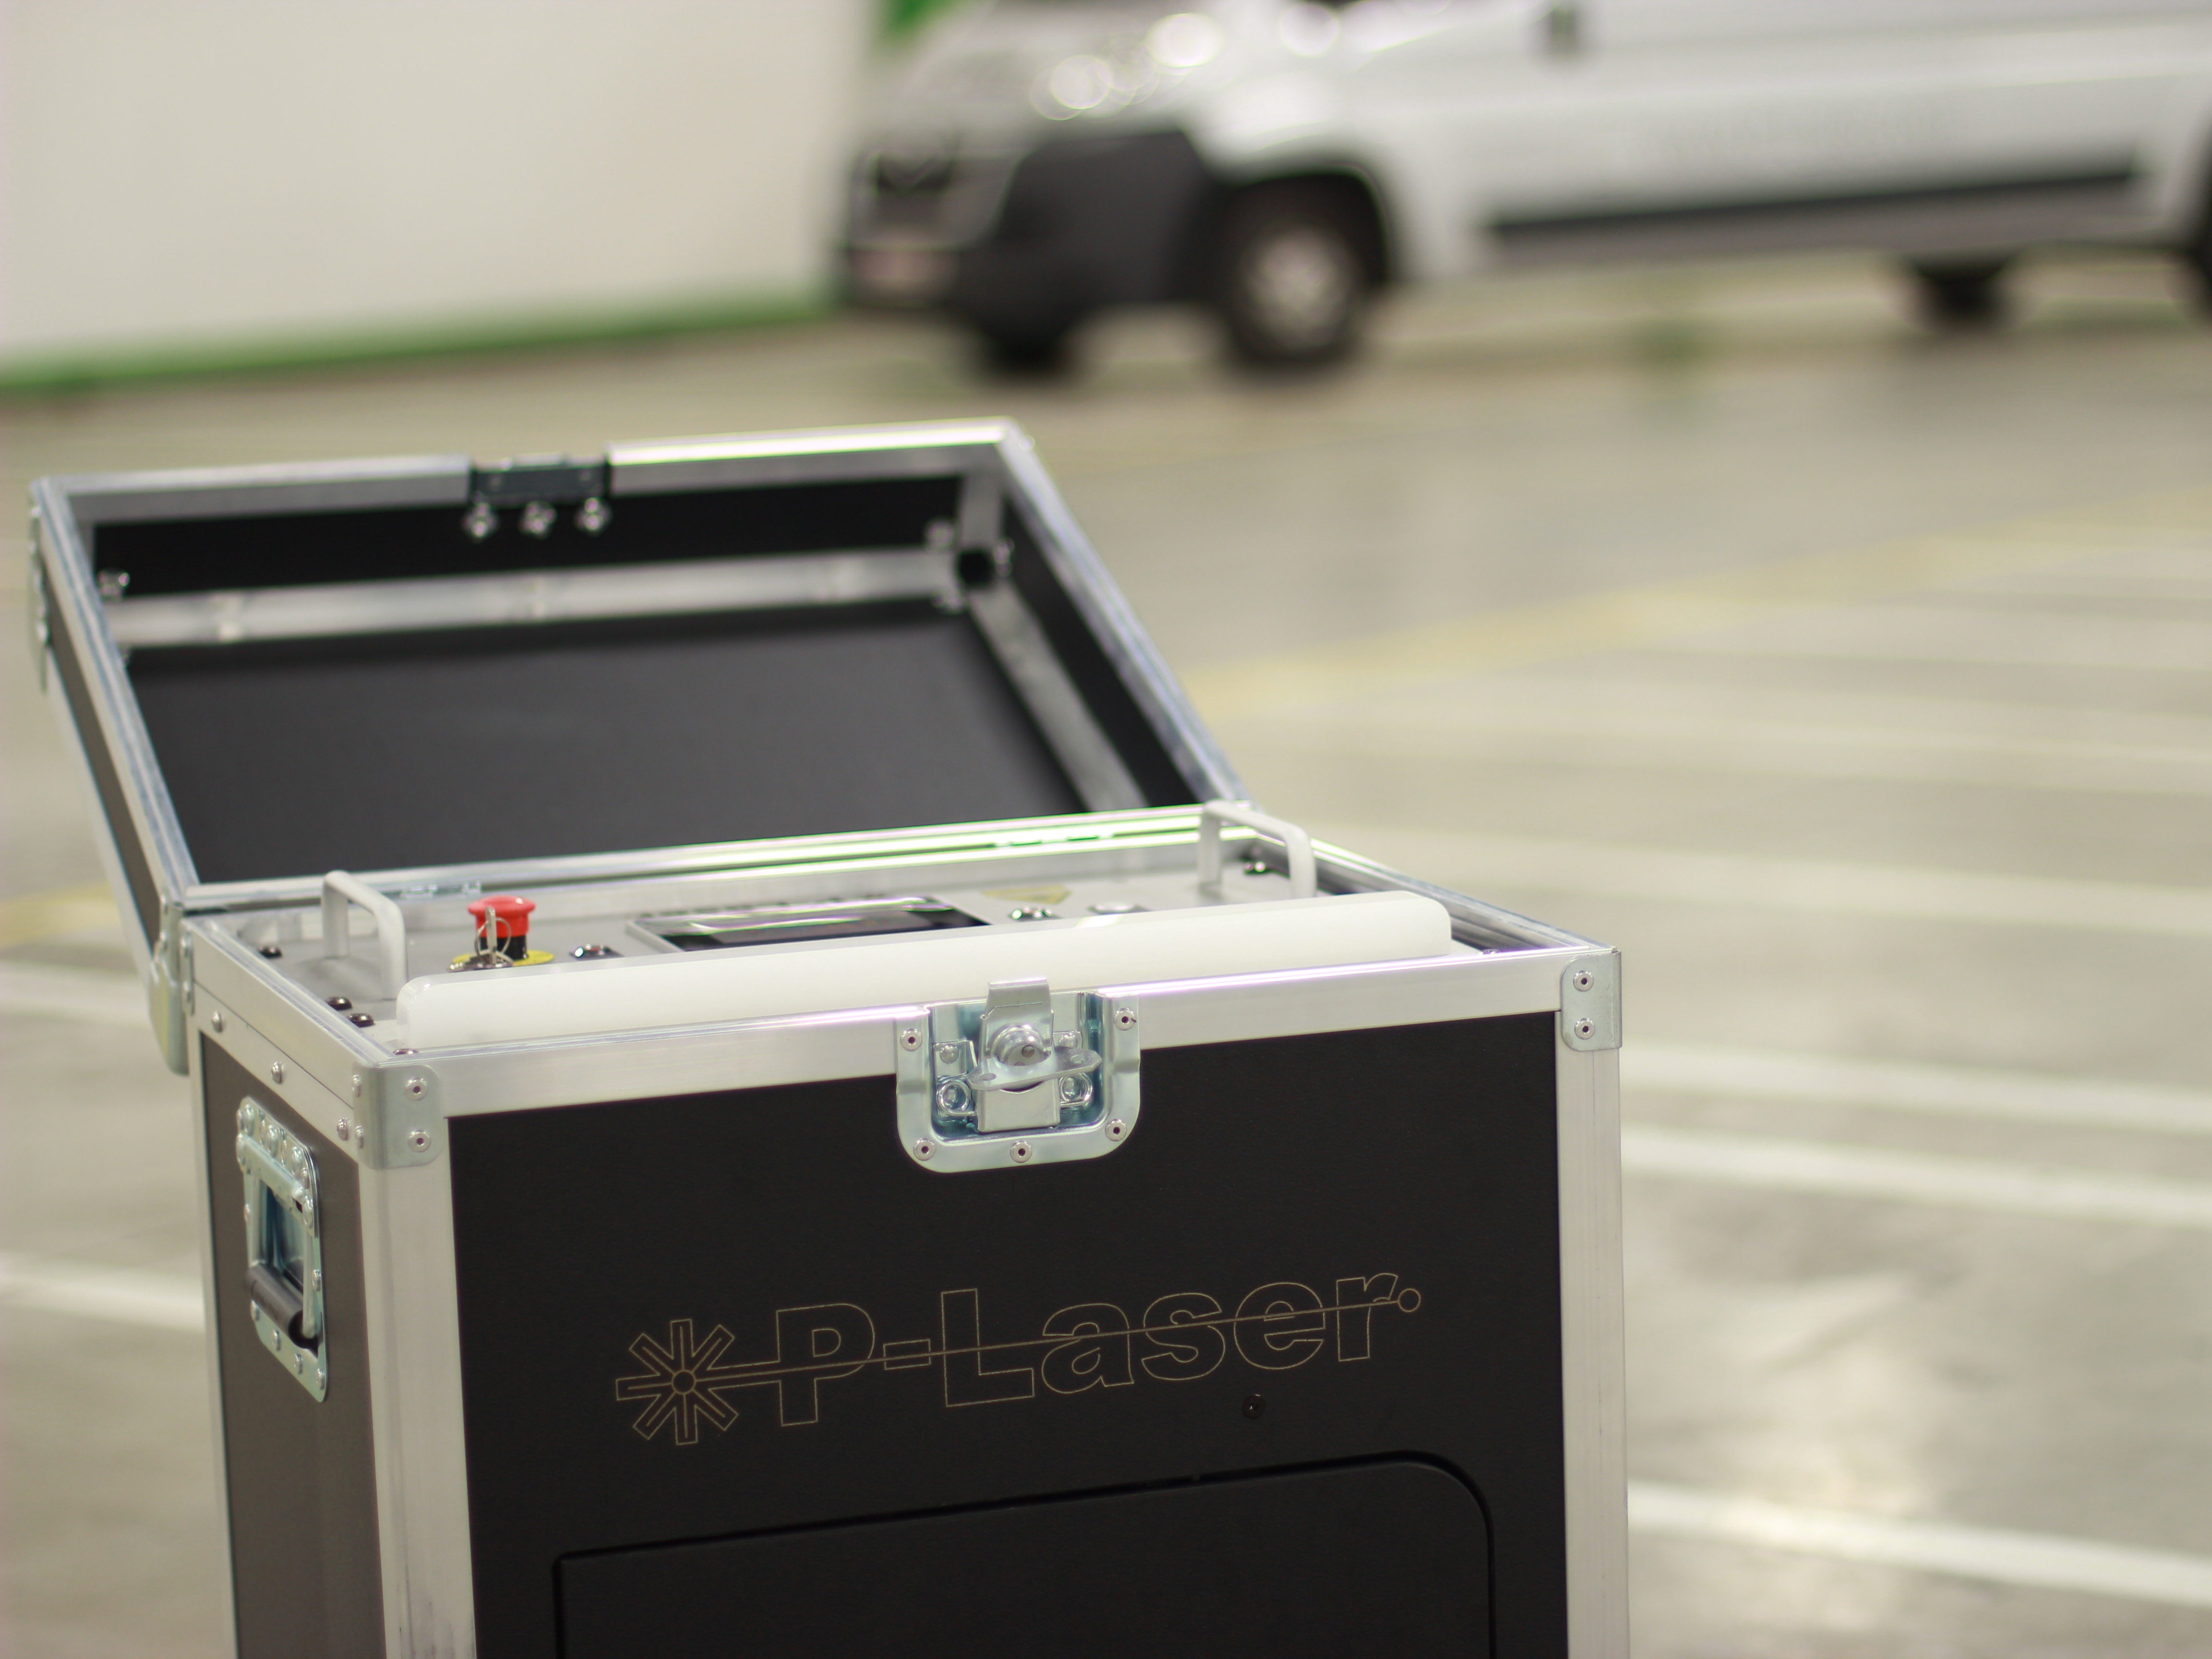 P-Laser Low Power laser cleaning unit in flight case